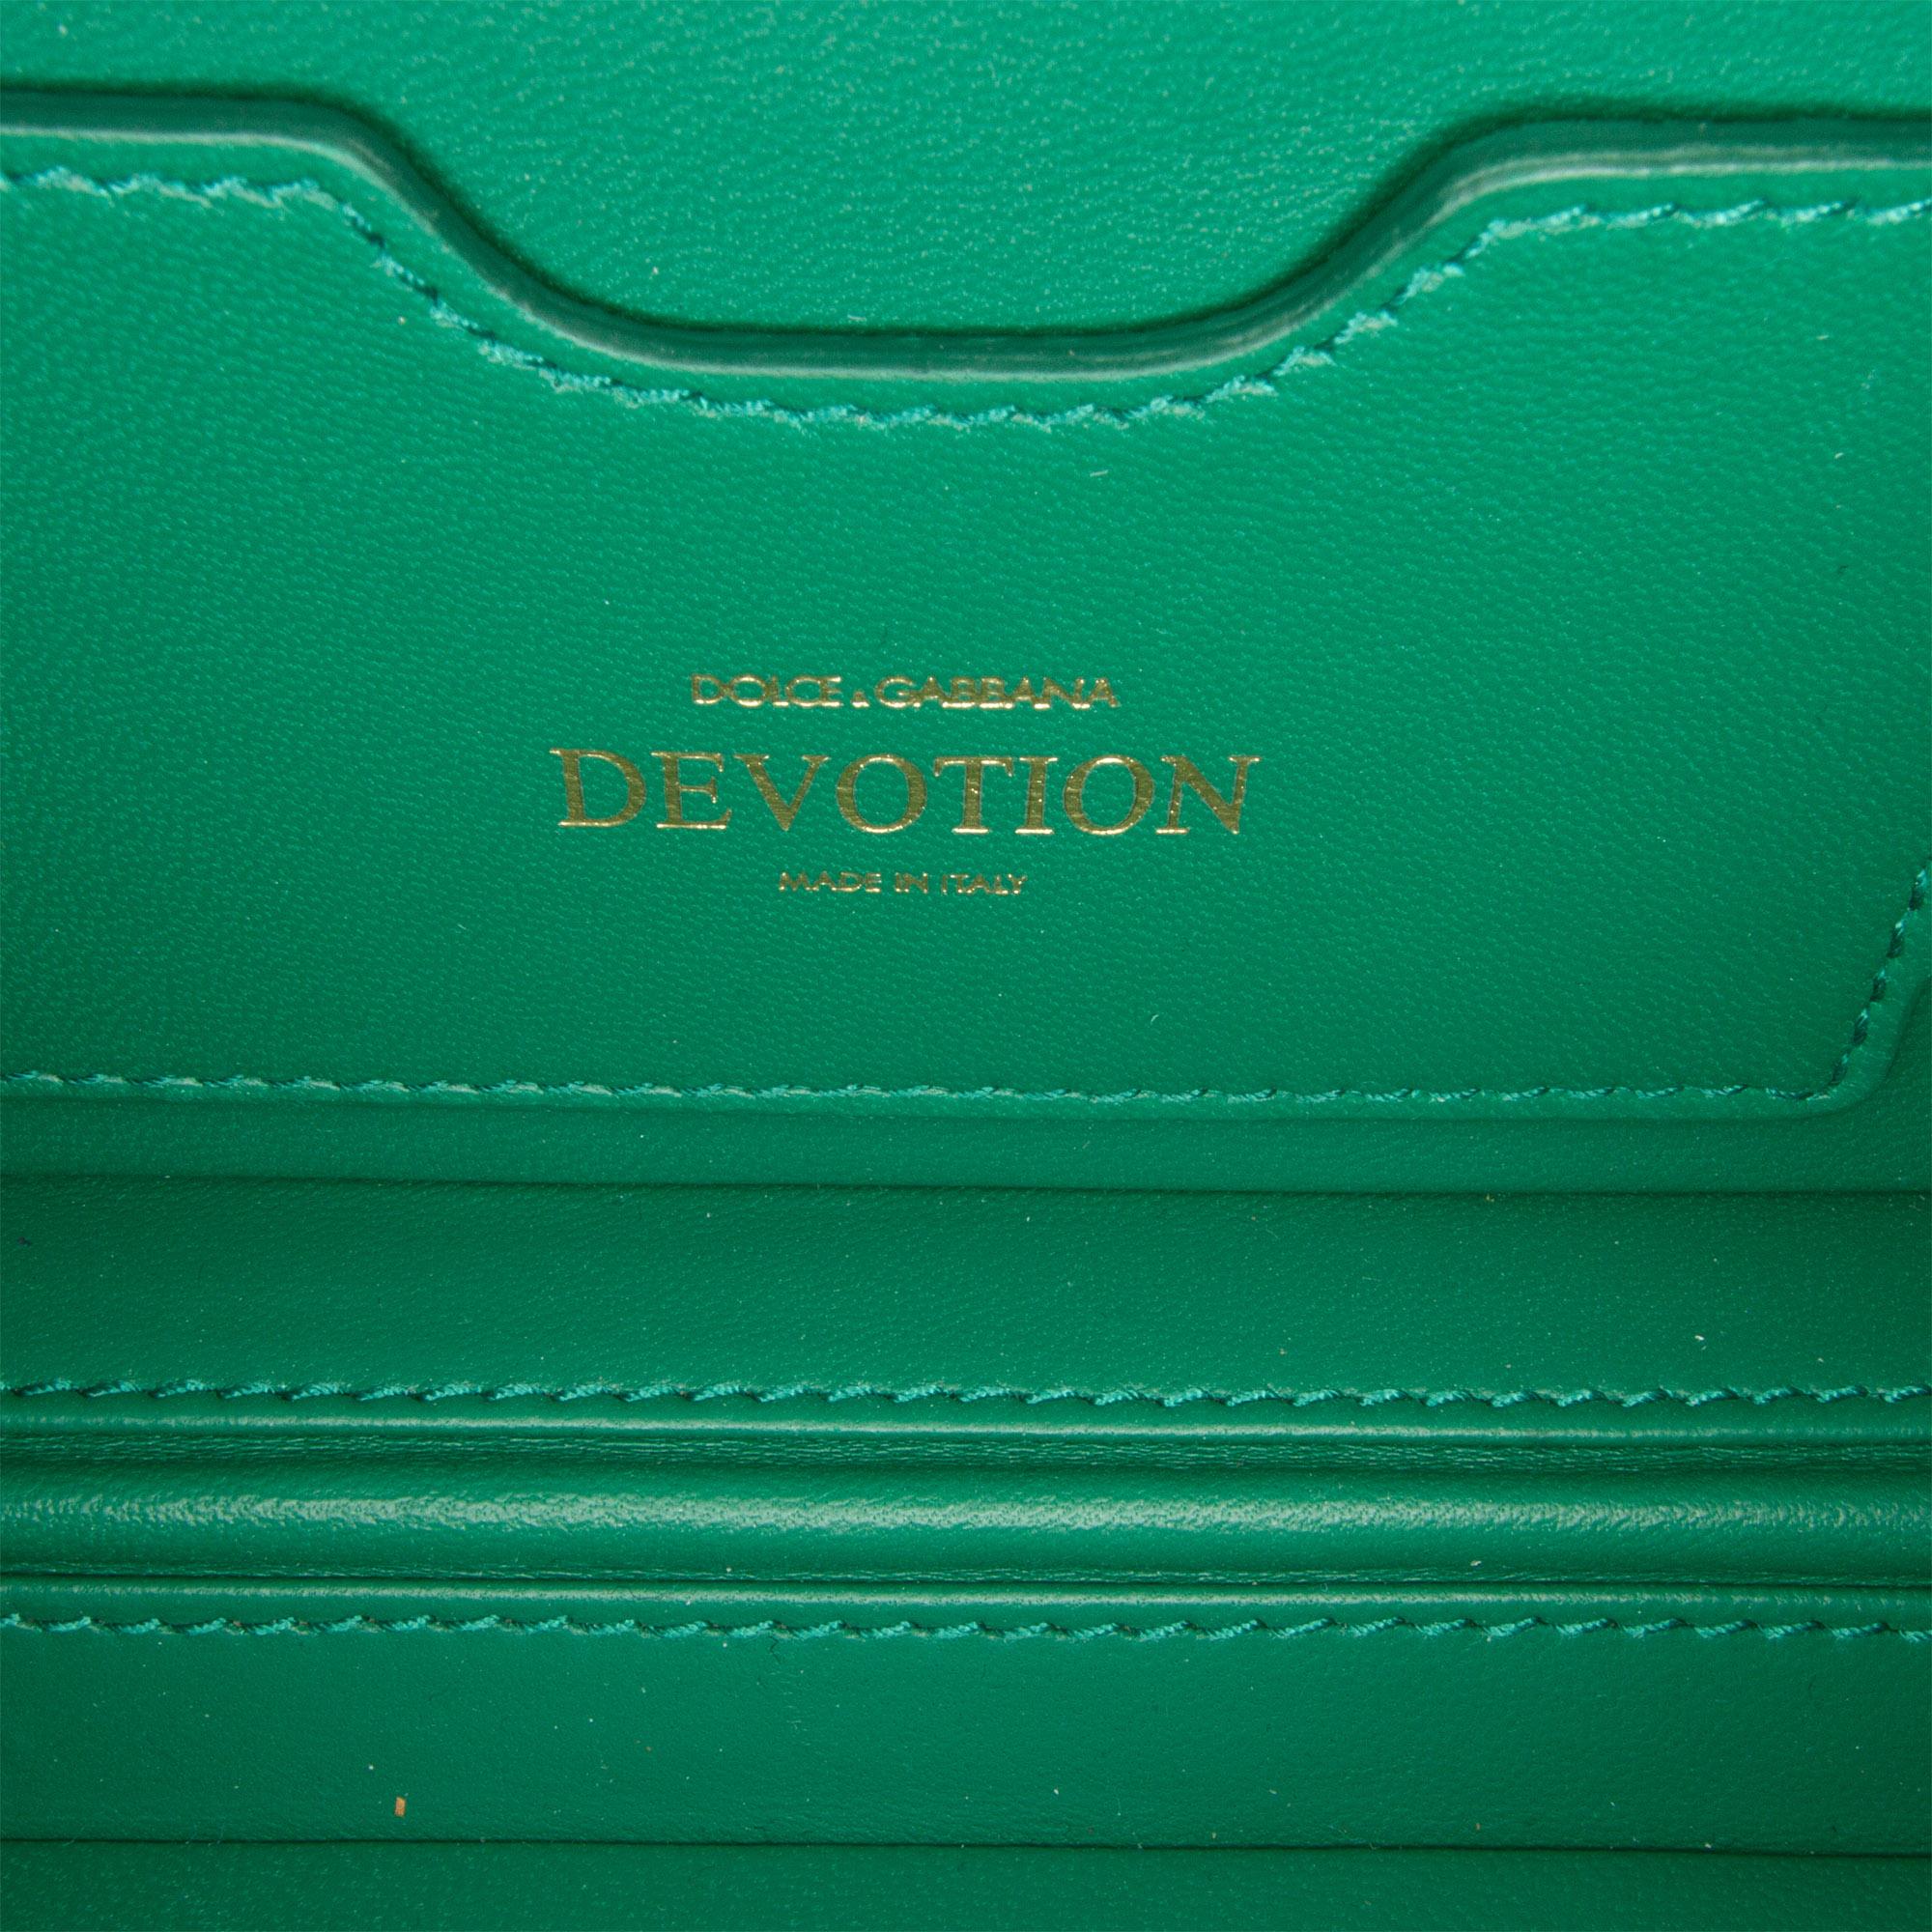 Dolce & Gabbana Green Plexiglass Devotion Crossbody Bag